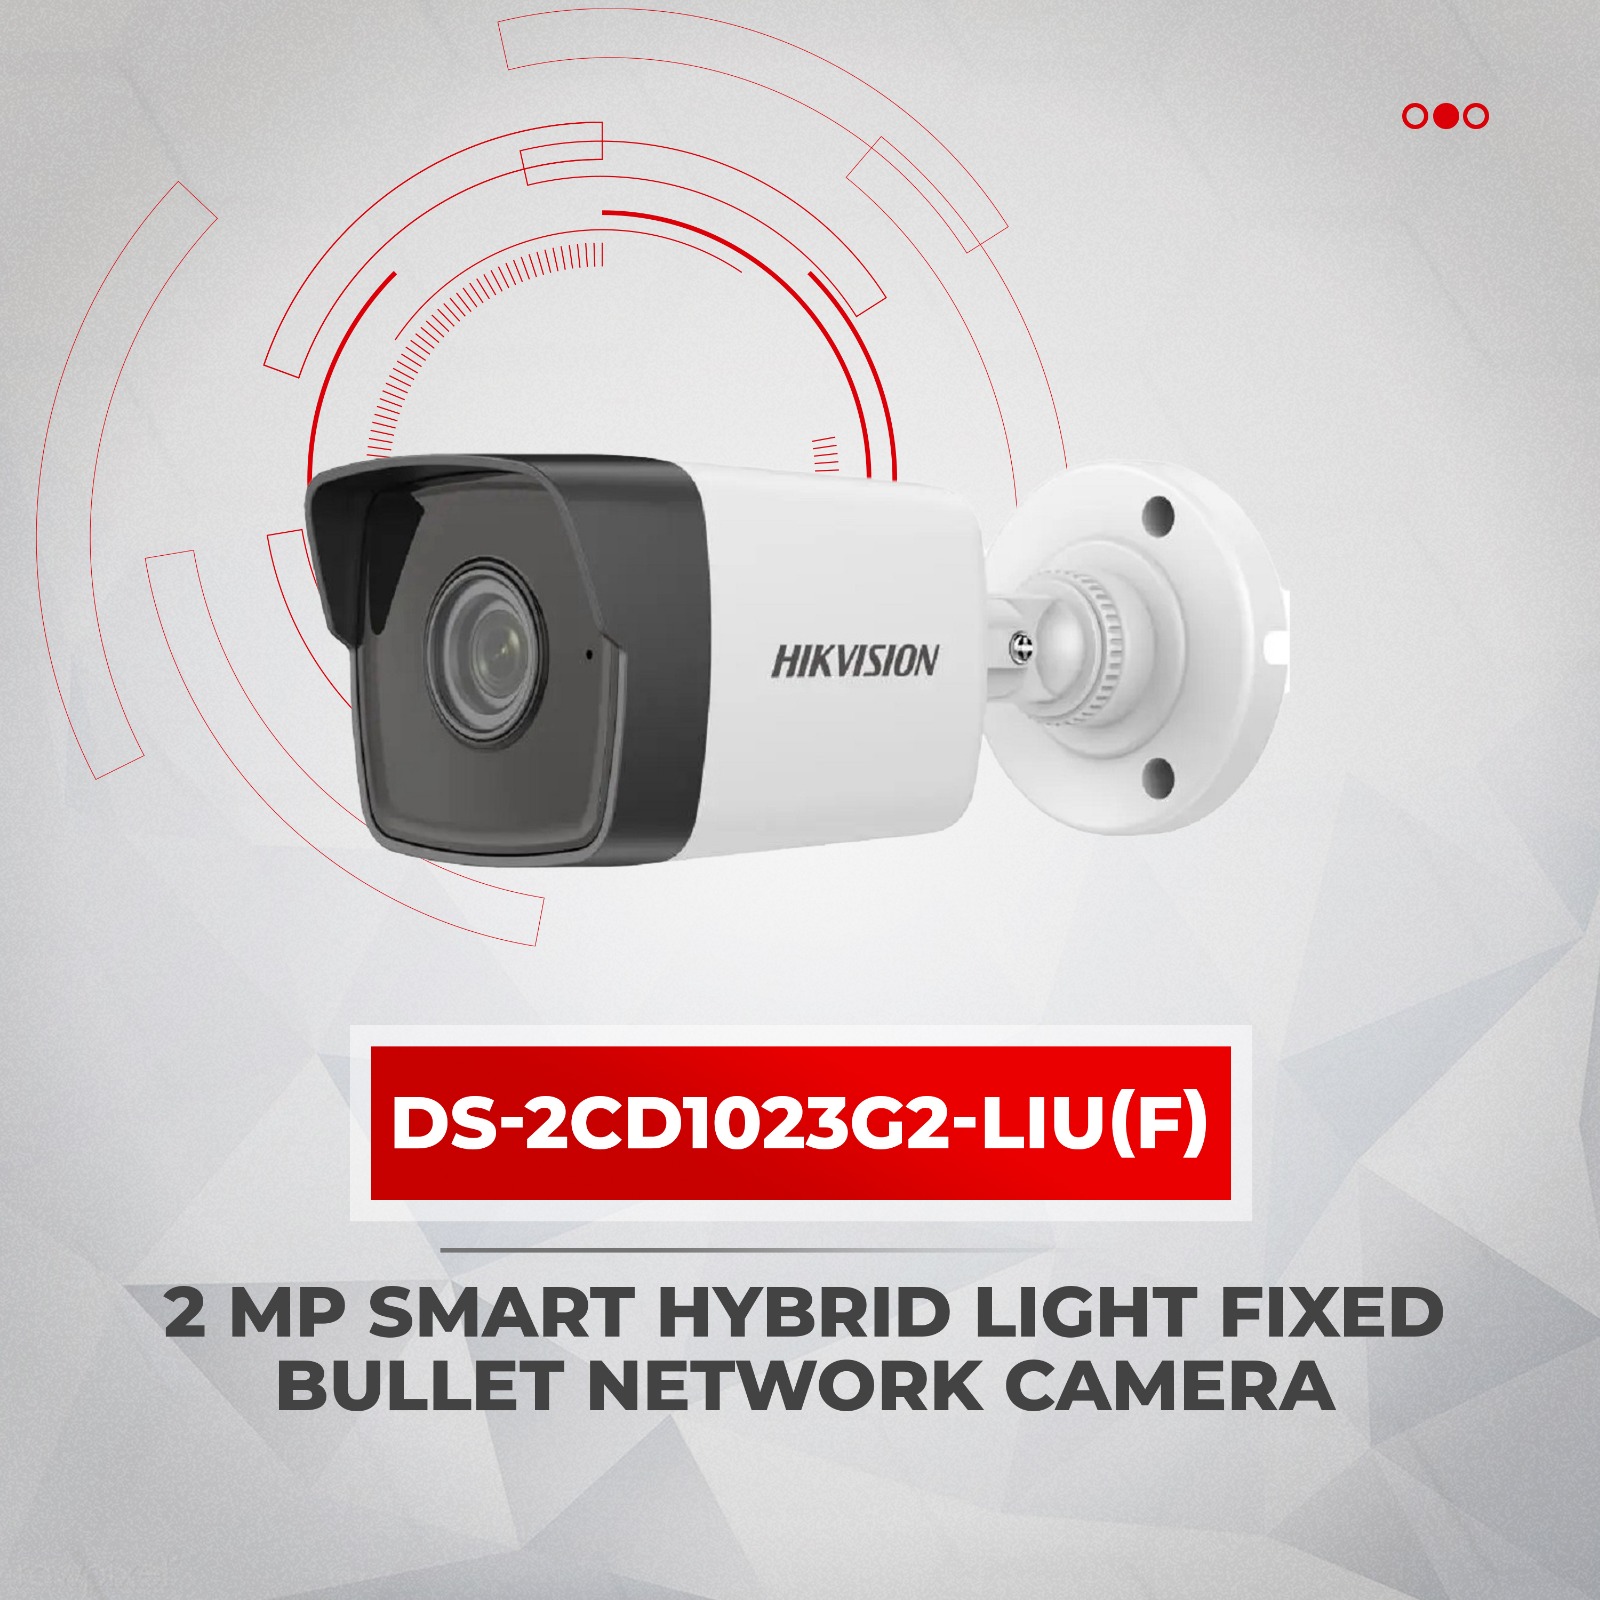 2 Mp Smart Hybrid Light Fixed Bullet Network Camera Hikvision Cctv Security Surveillance Camera 